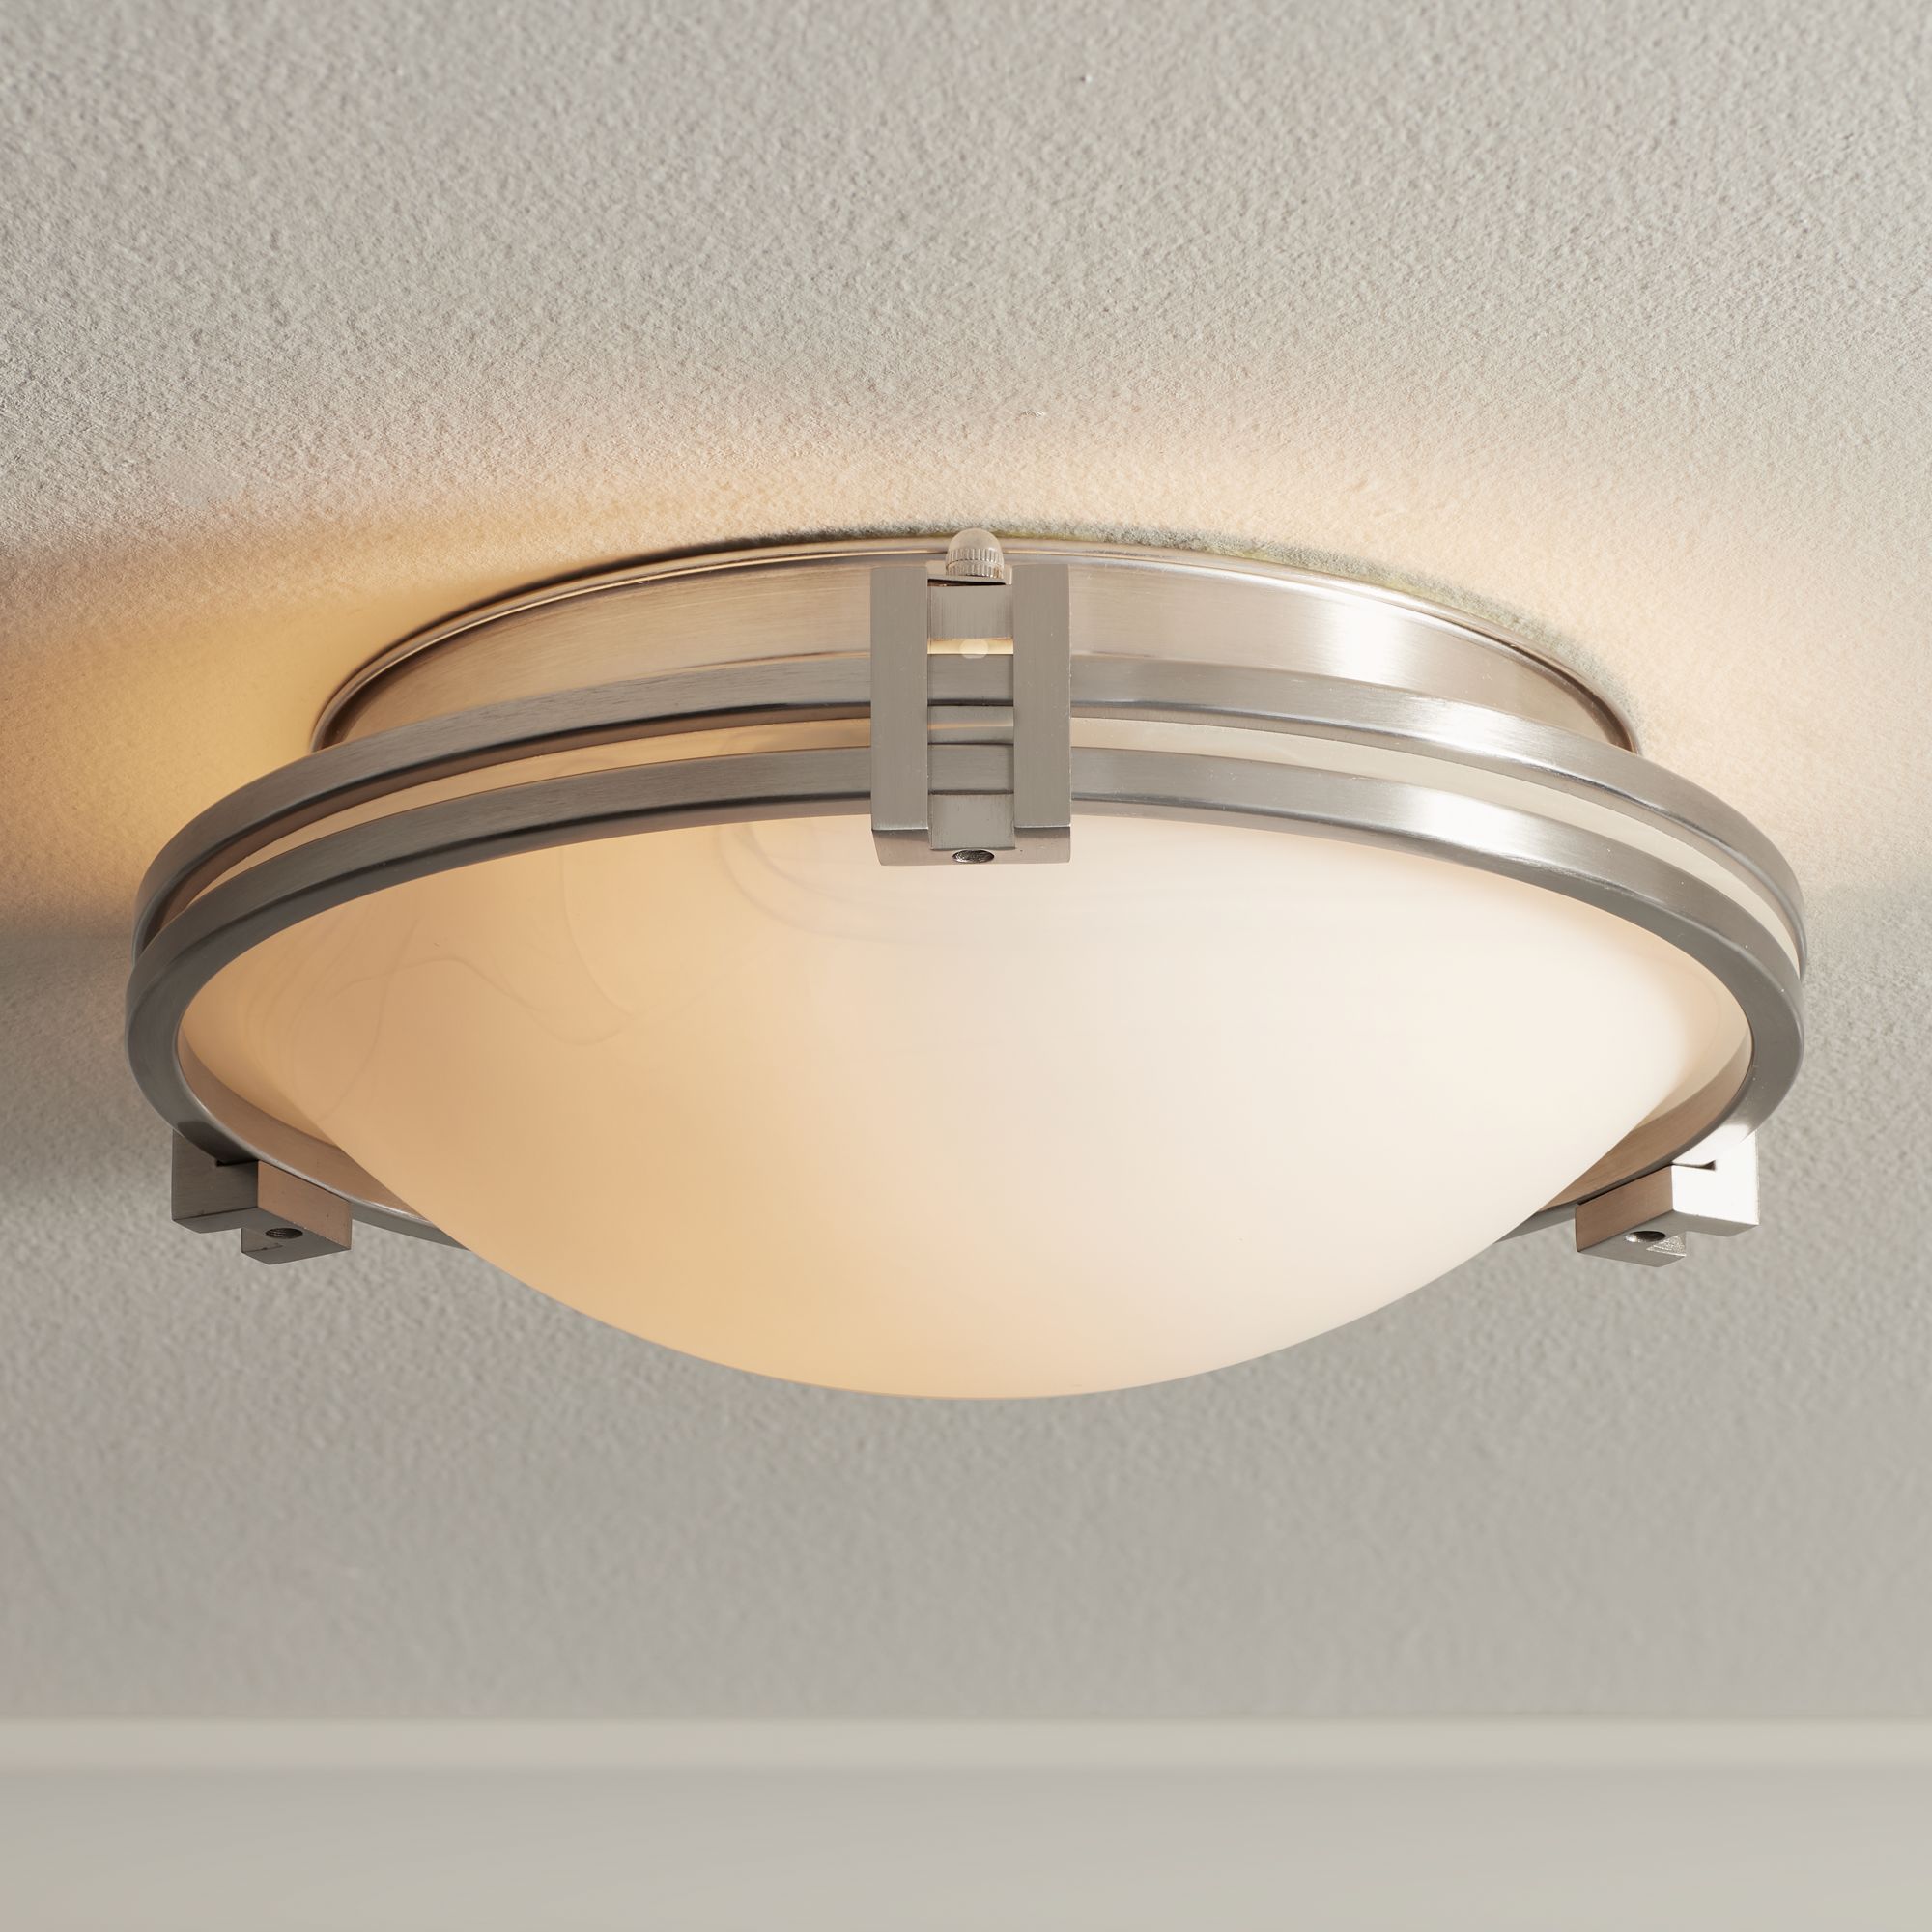 ceiling lamp fixture